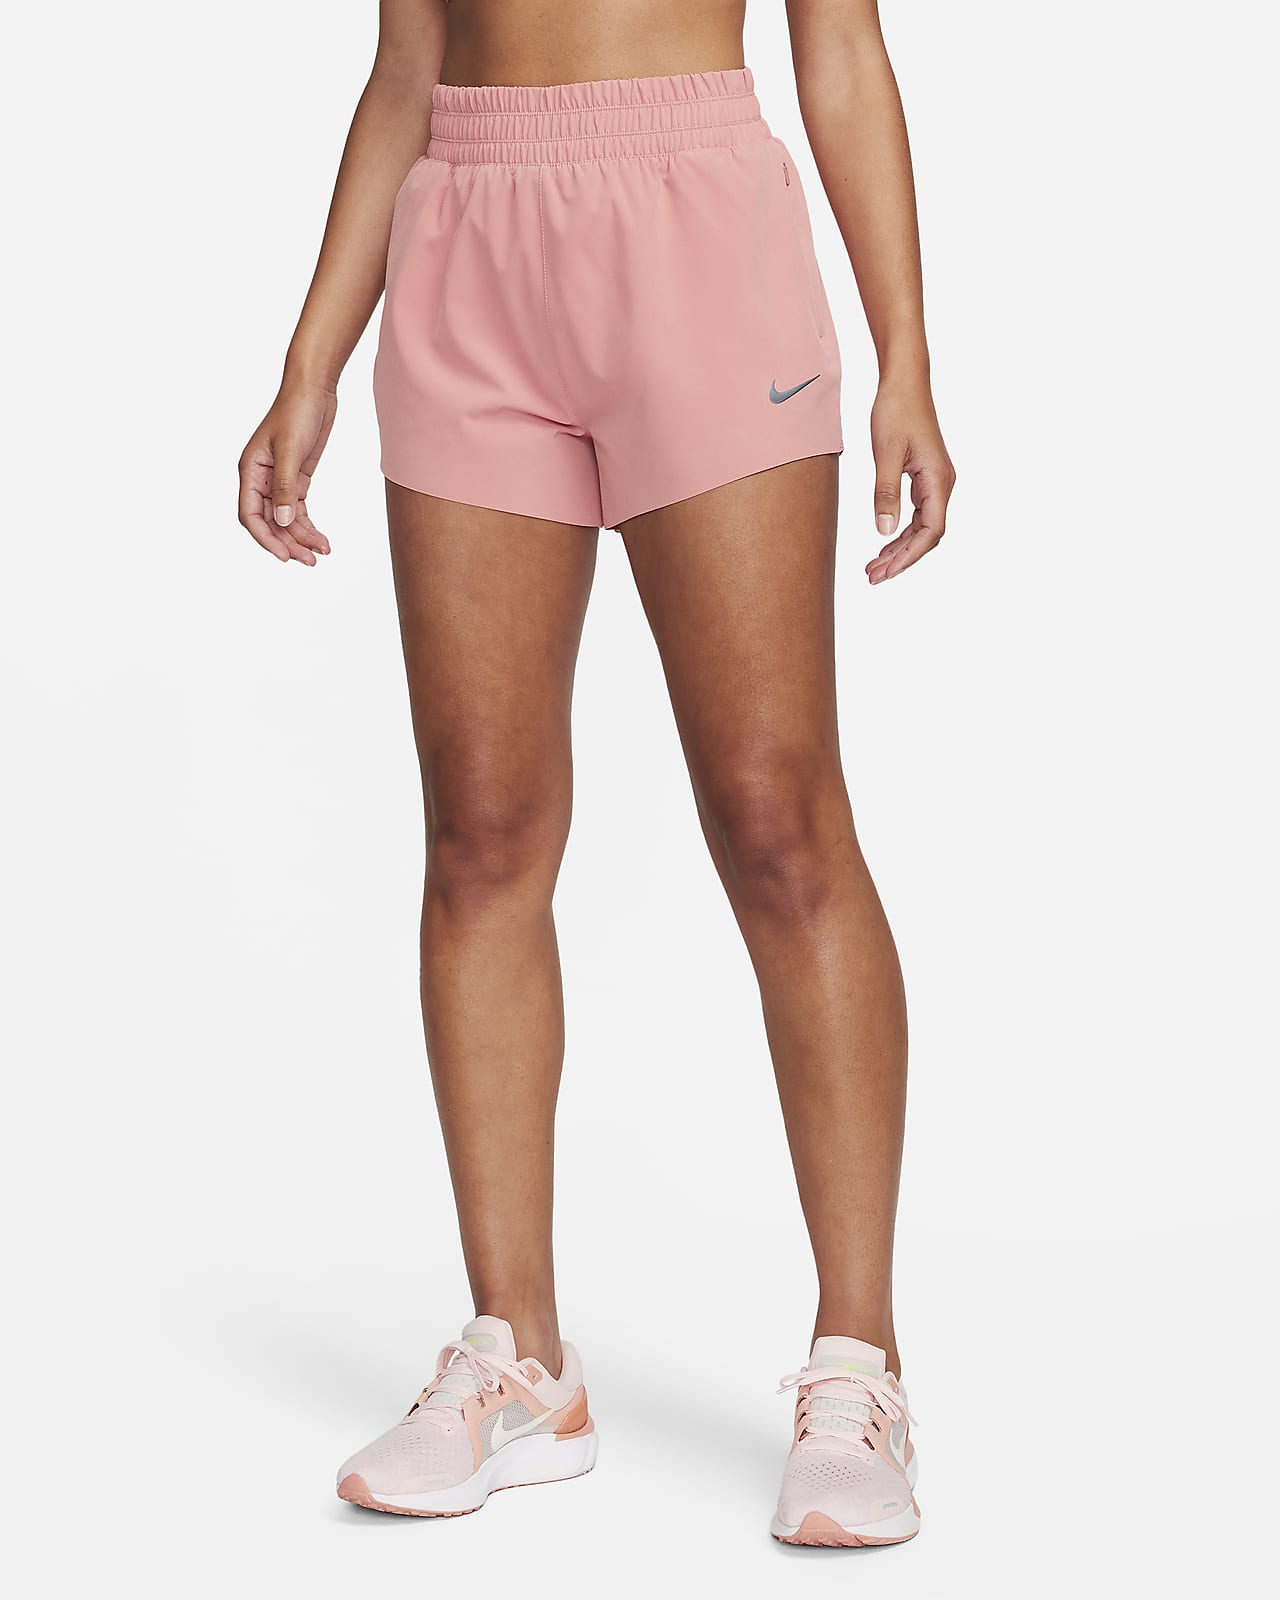 Shorts de running con forro de ropa interior de 8 cm, cintura alta y bolsillos para mujer Nike Dri-FIT Running Division 